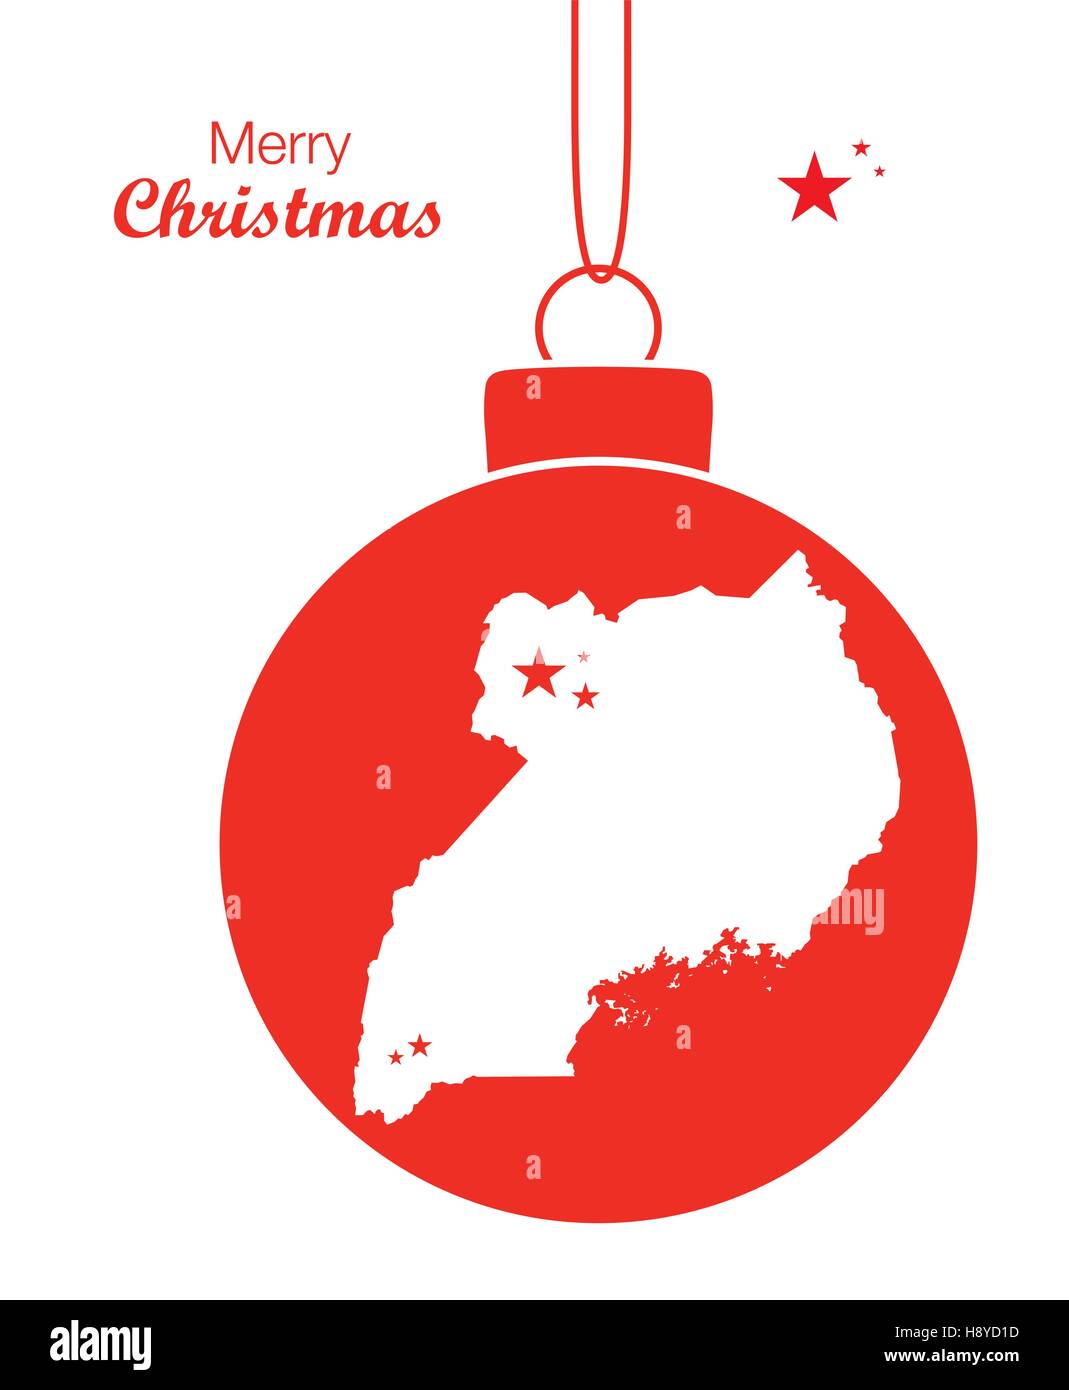 Merry Christmas illustration theme with map of Uganda Stock Vector